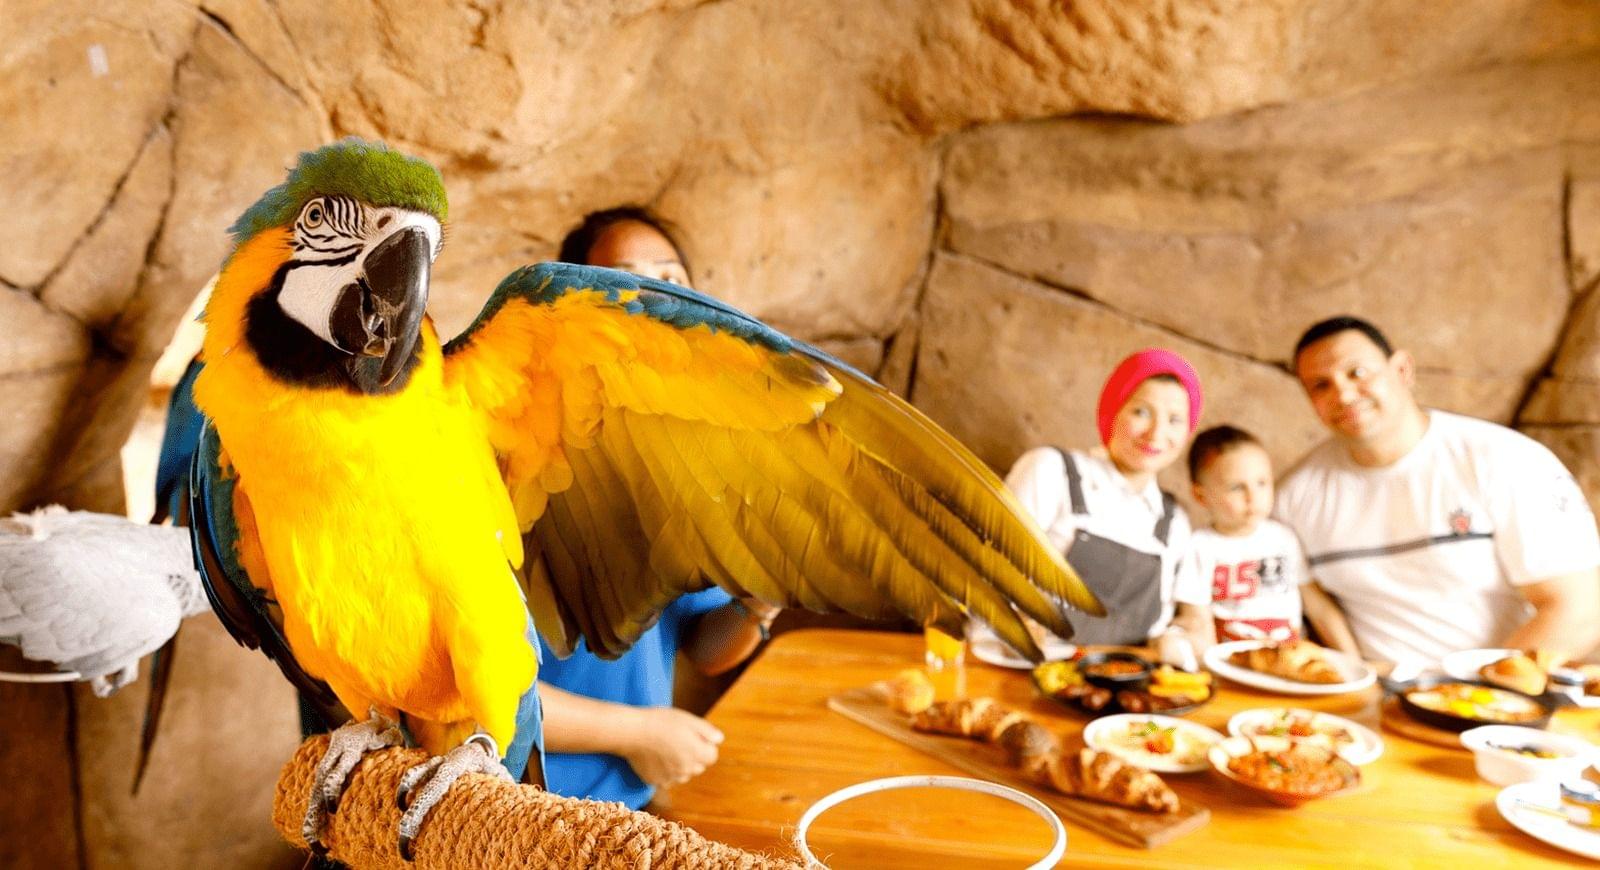 Enjoy Morning Breakfast with Parrots